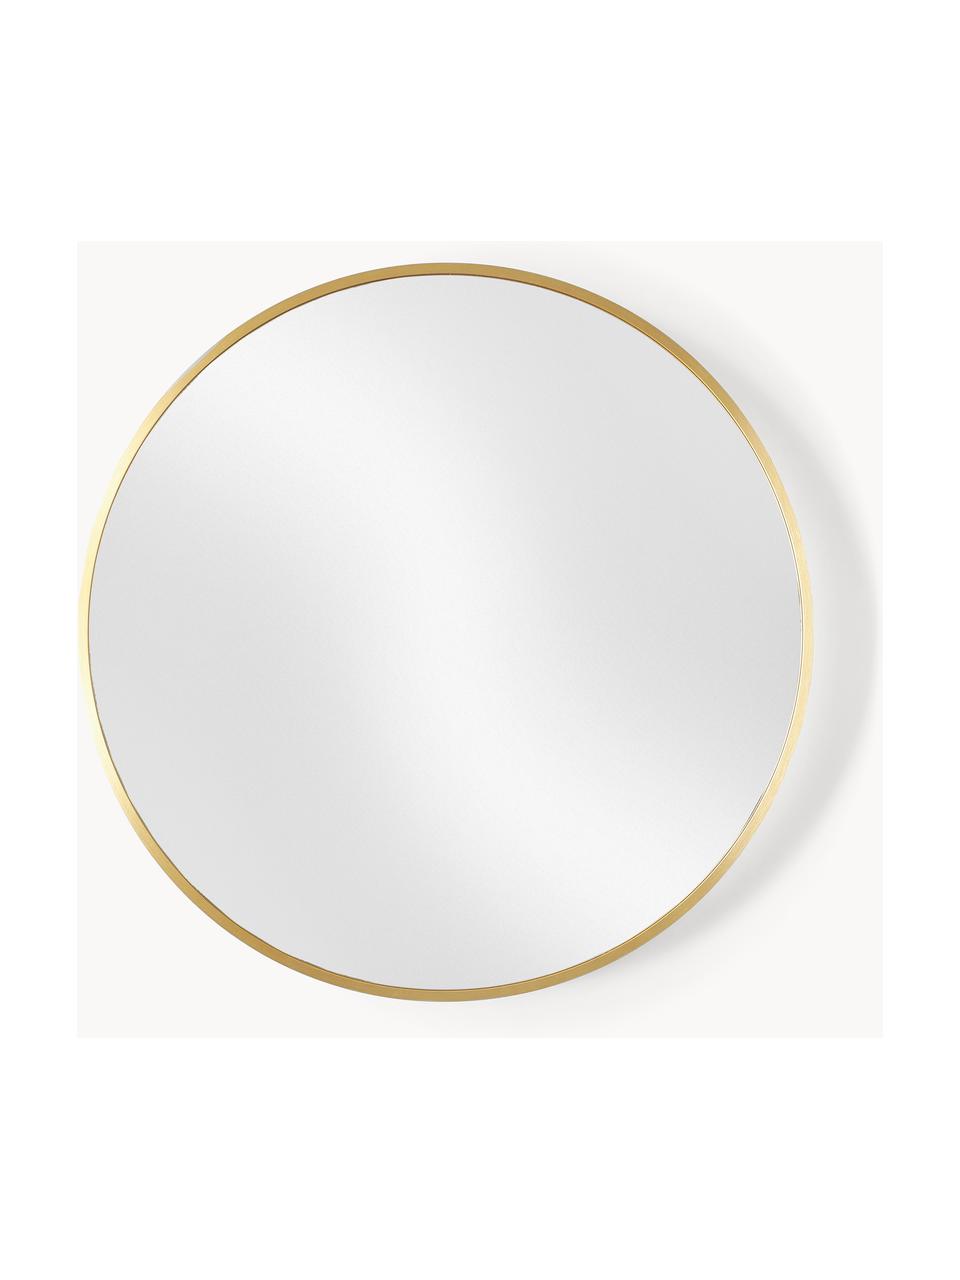 Kulaté nástěnné zrcadlo Ida, Zlatá, Ø 55 cm